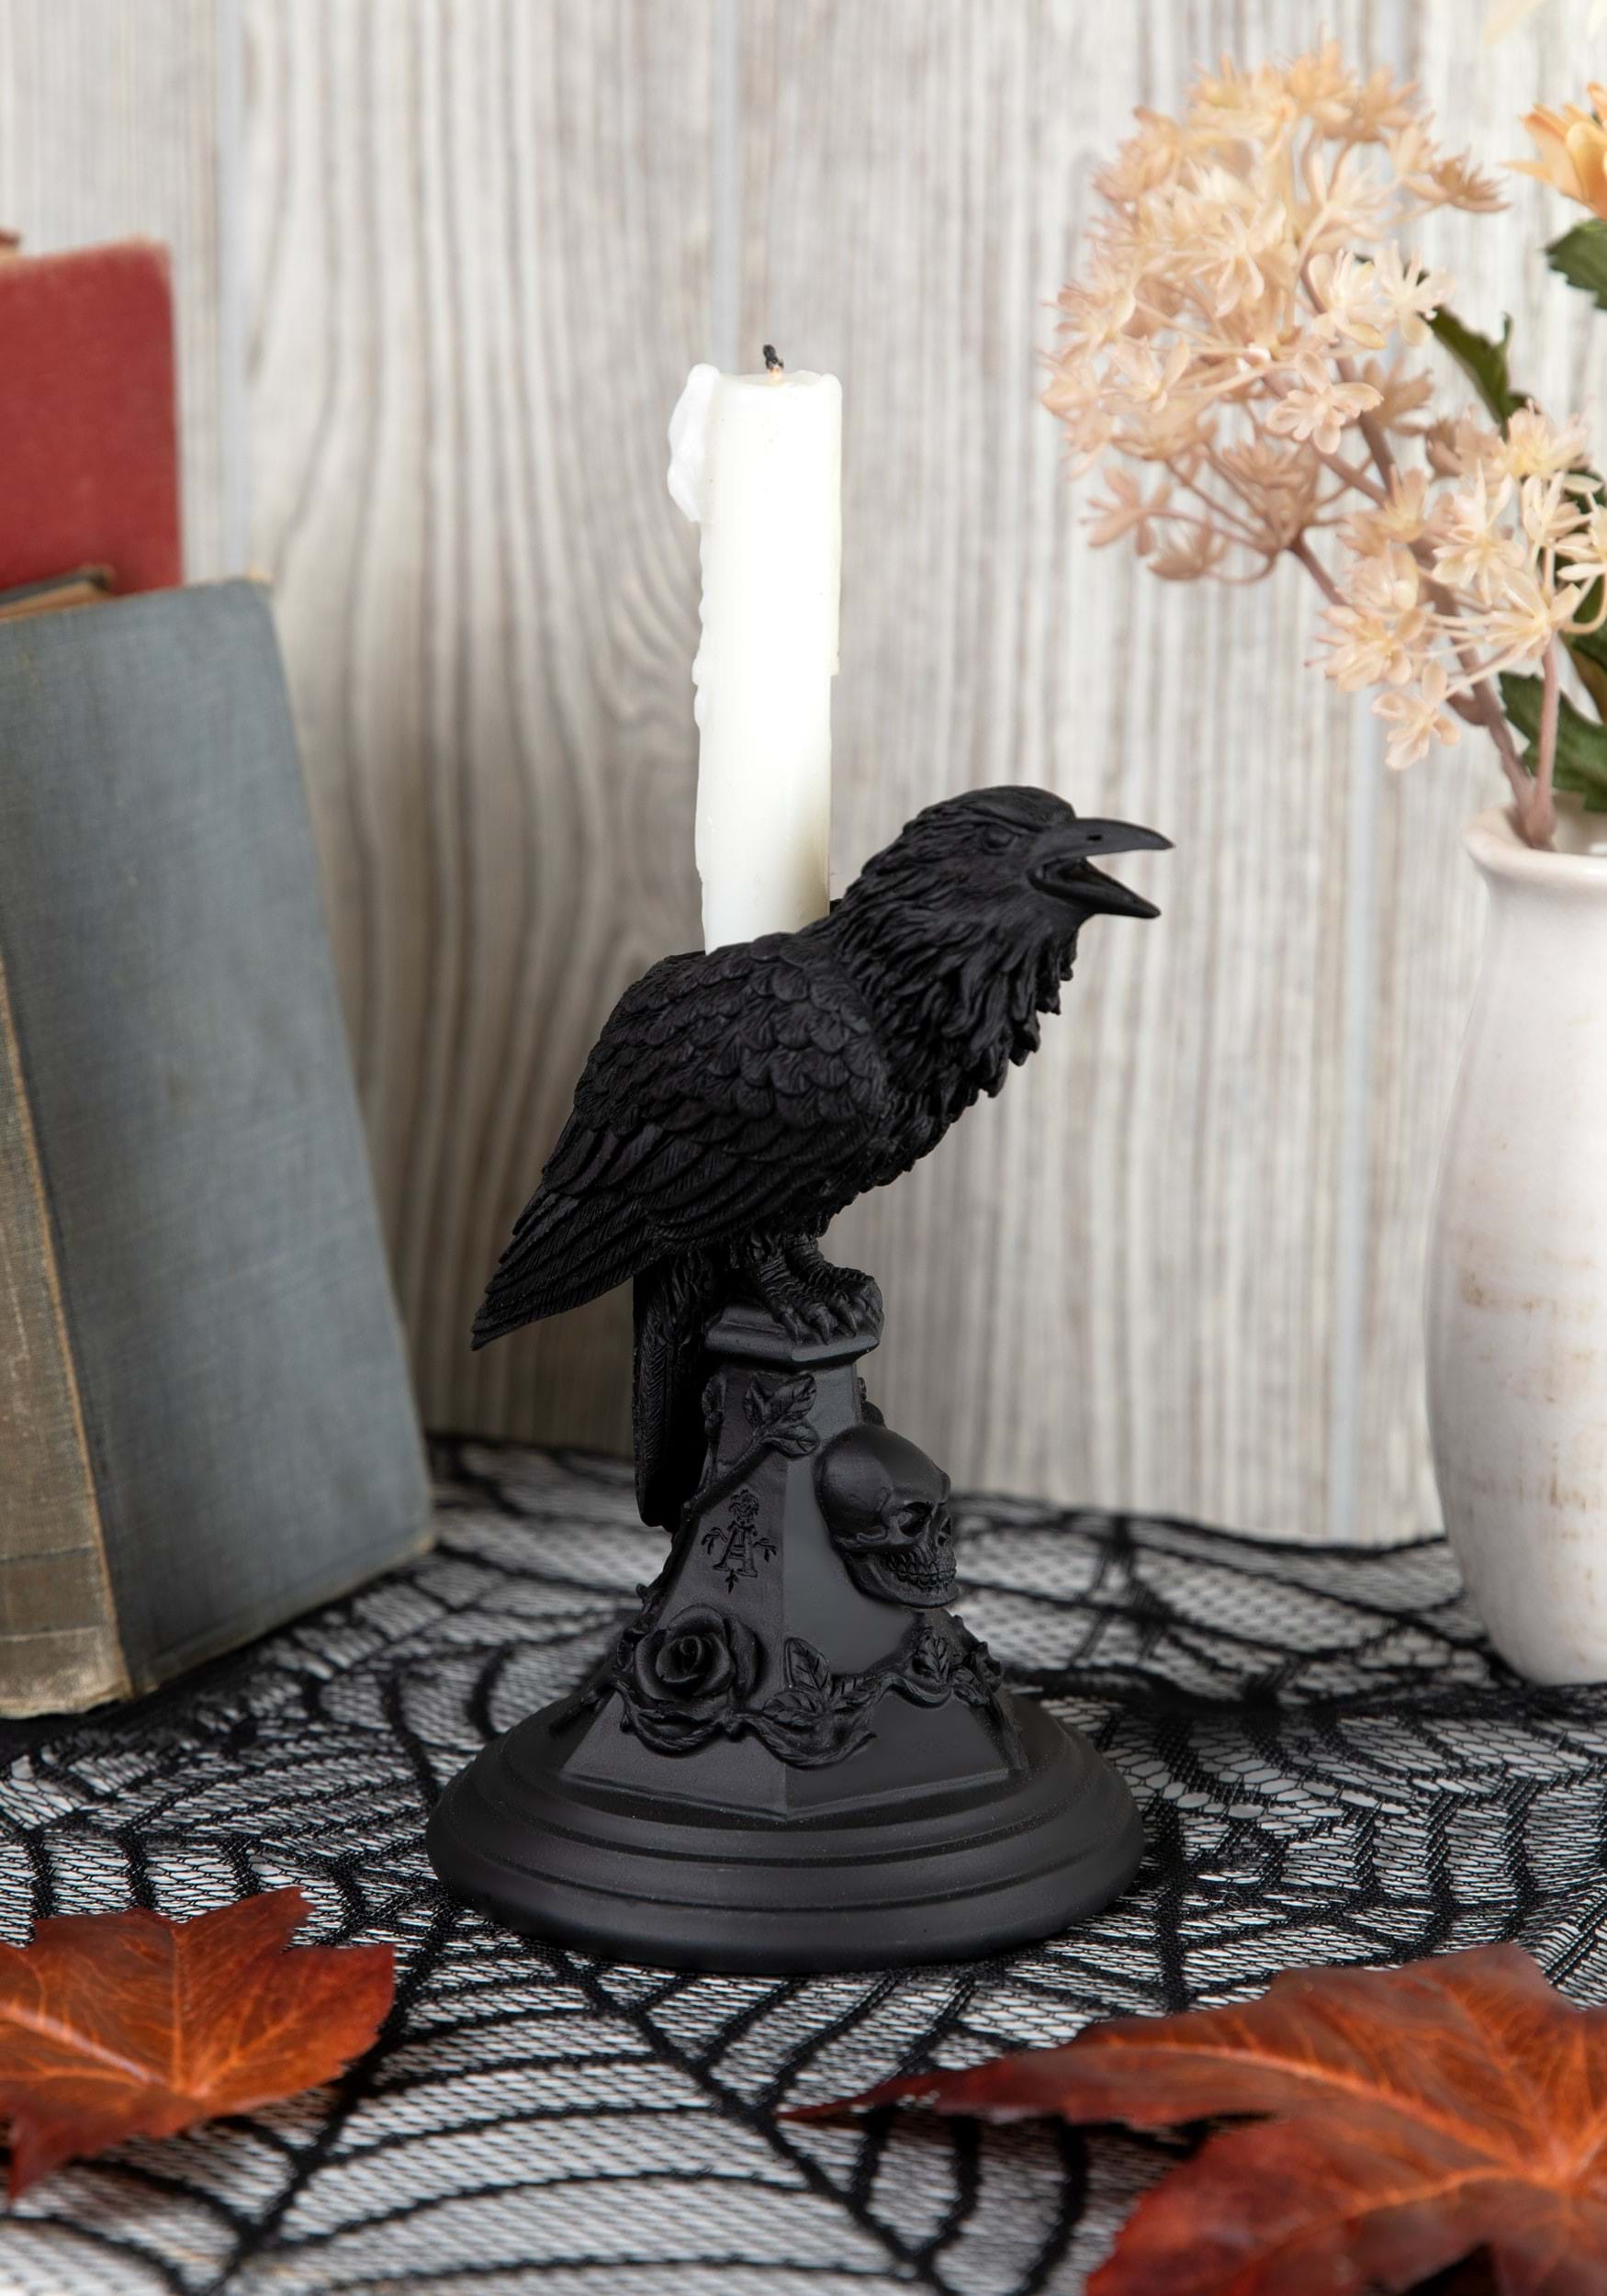 Poe's Gothic Raven Candle Stick Holder Decoration , Gothic Decorations